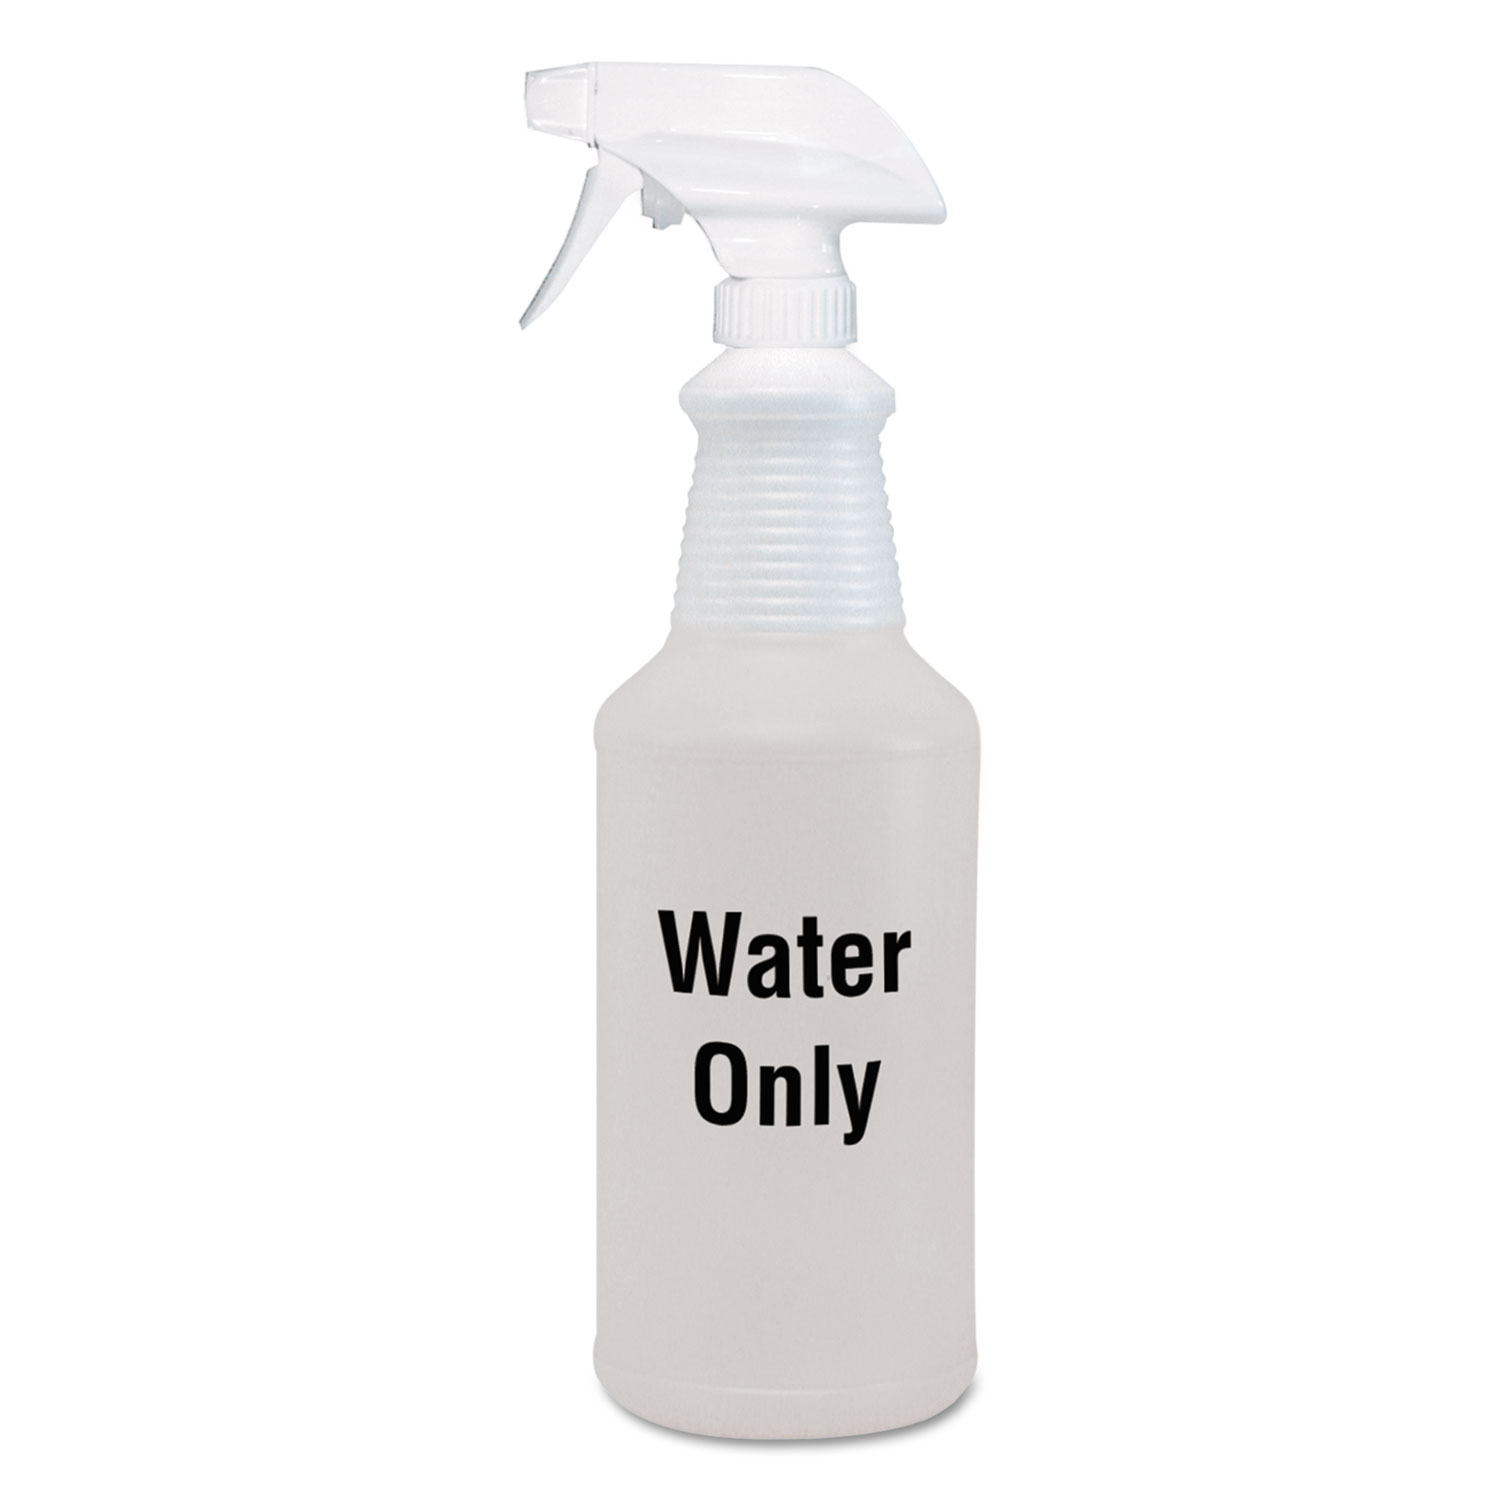  Diversey D4968908 Water Only Spray Bottle, Clear, 32 oz, 12/Carton (DVOD4968908) 